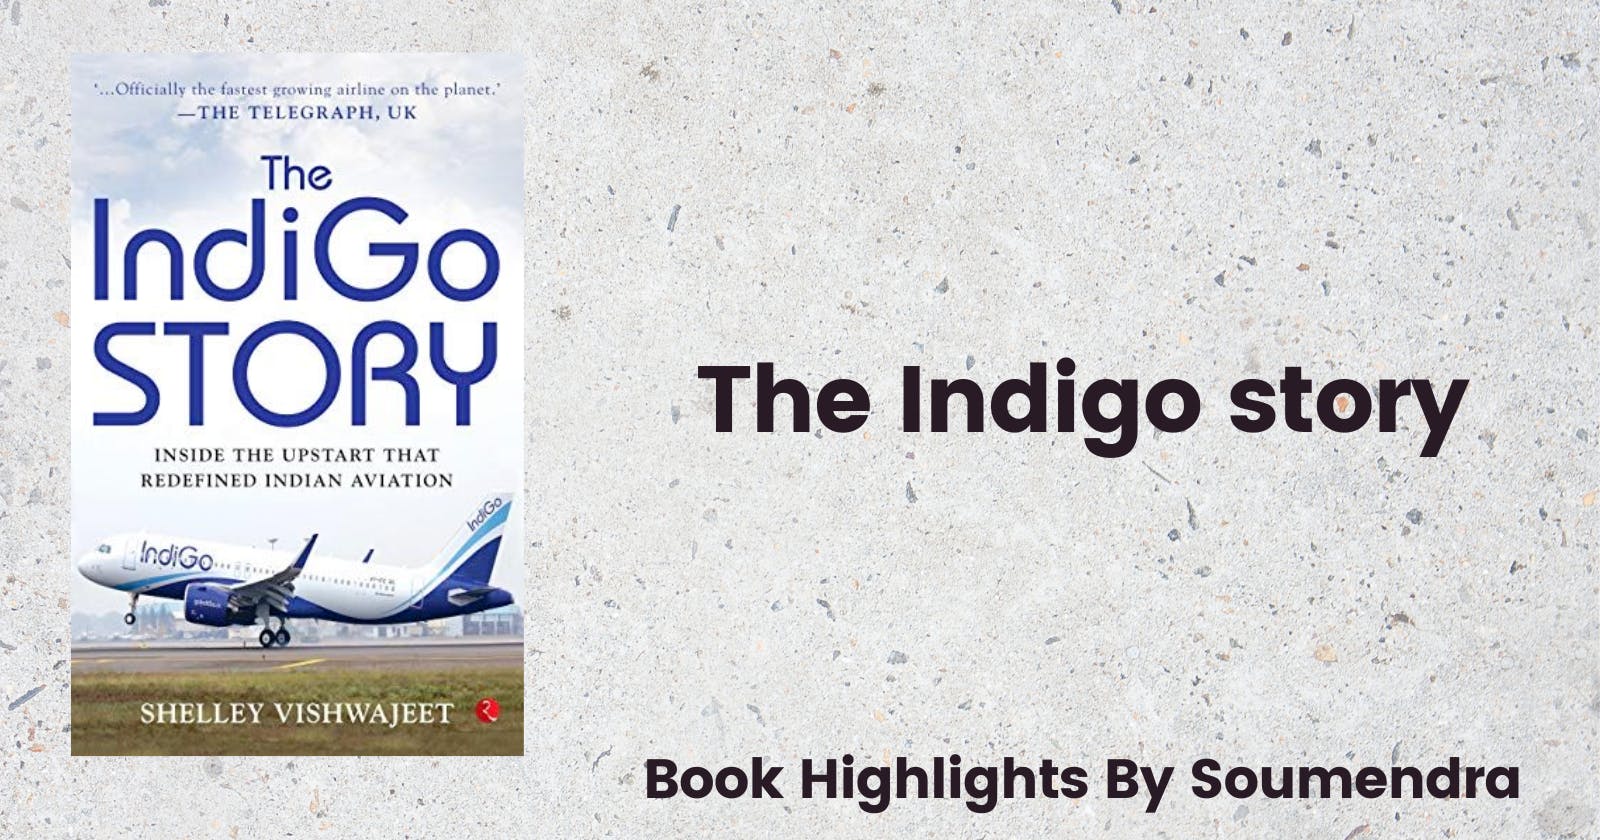 Book Highlights: The Indigo story